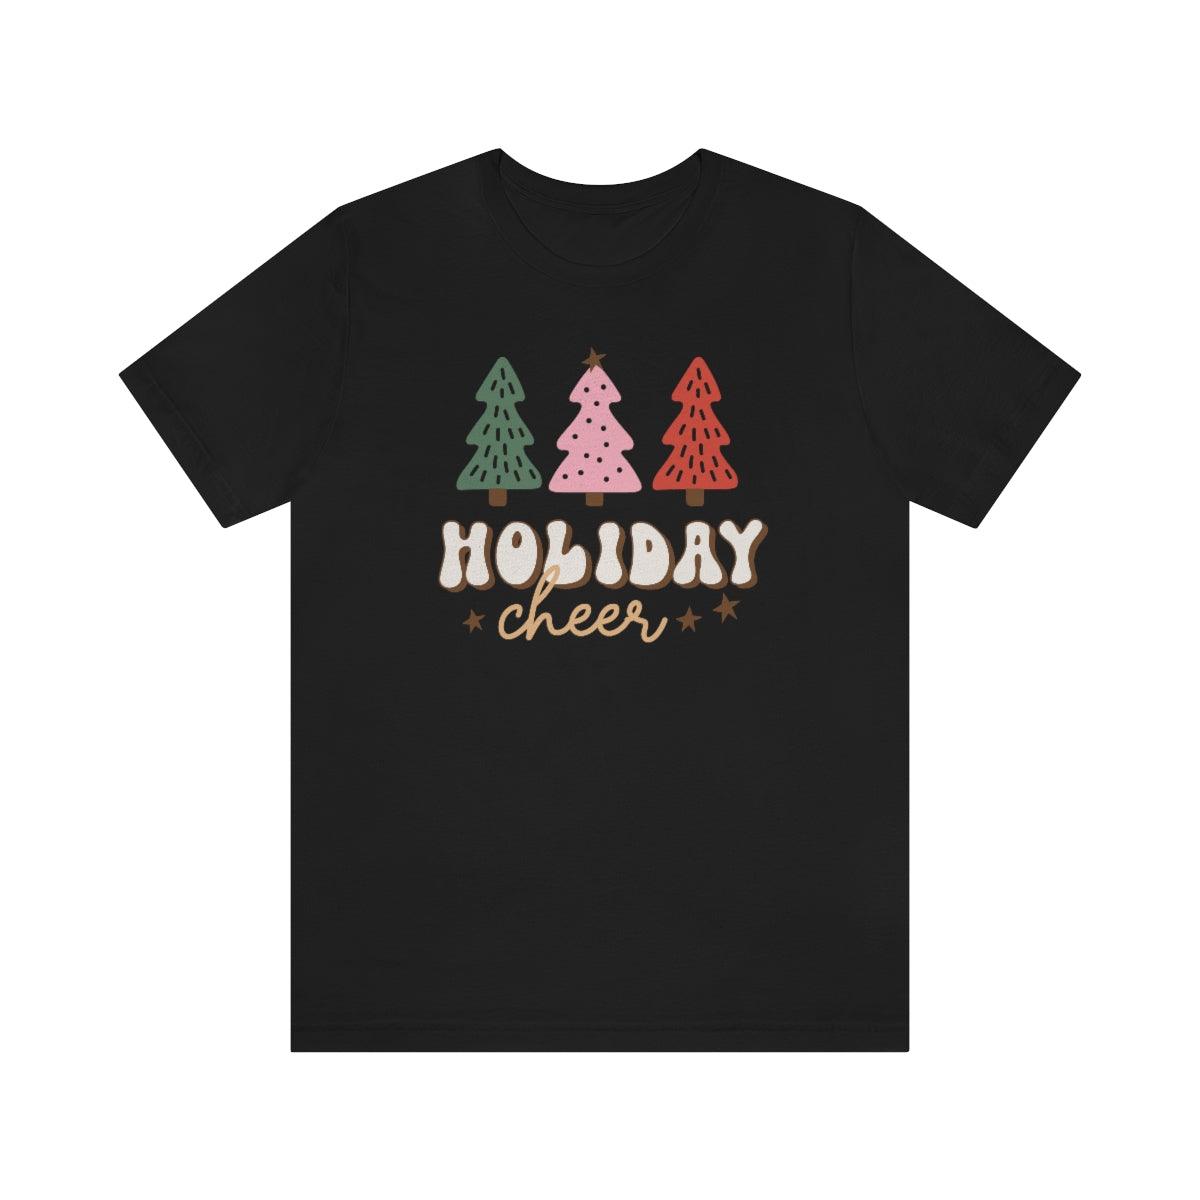 Retro Holiday Cheer Trees Christmas Shirt Short Sleeve Tee - Crystal Rose Design Co.